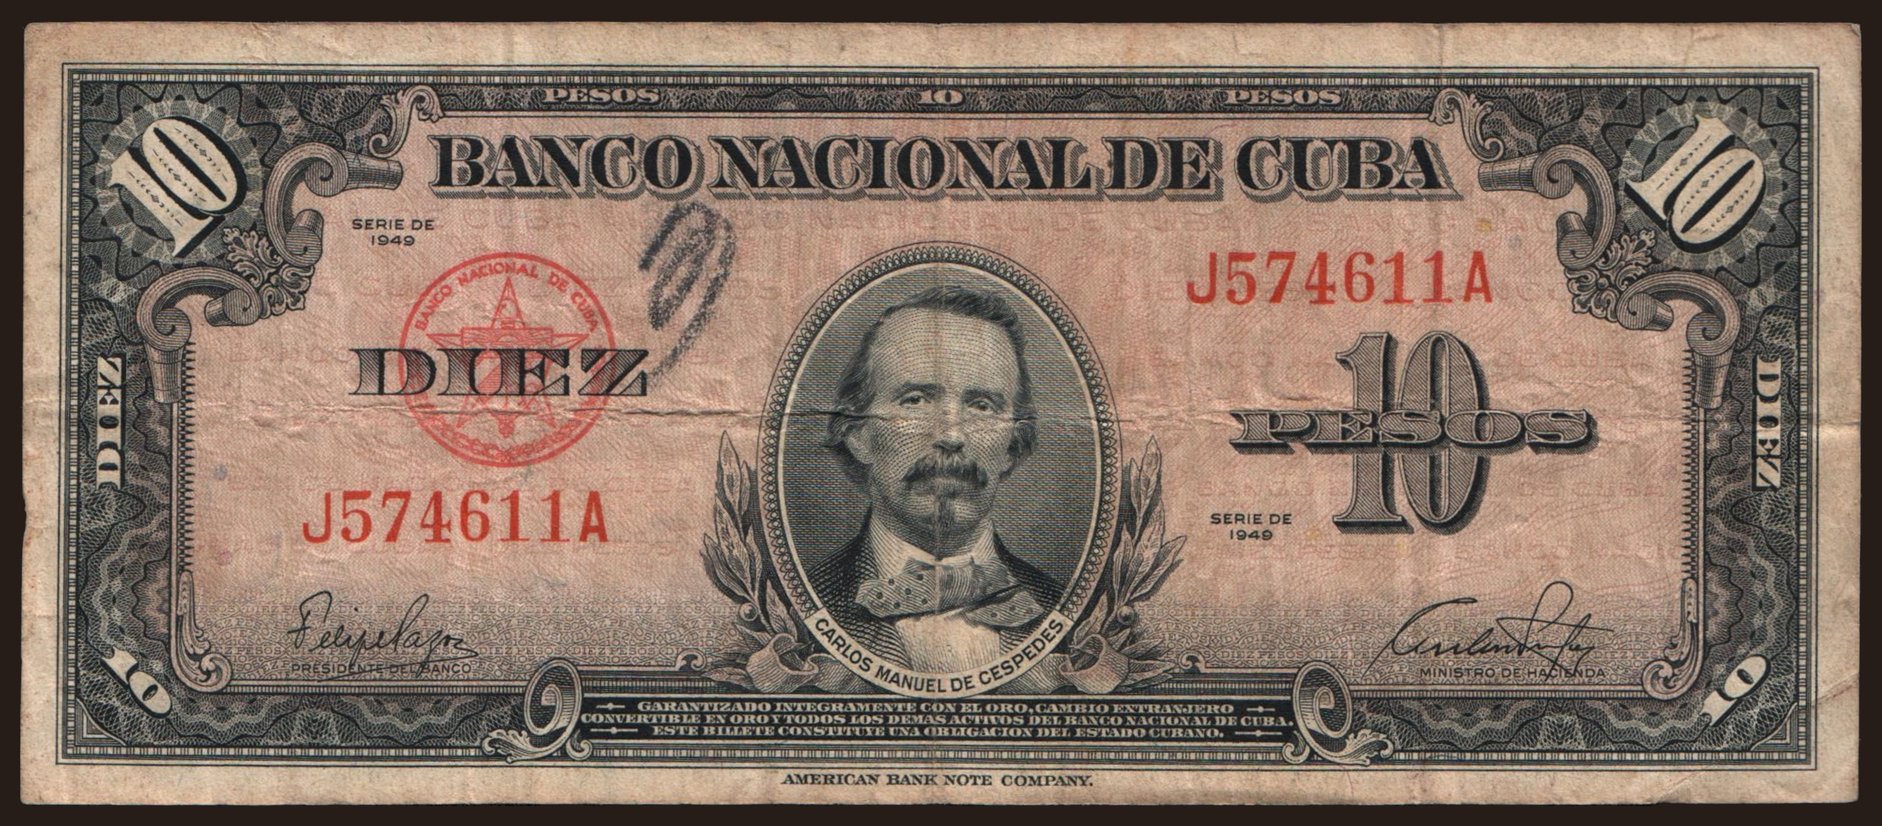 10 pesos, 1949